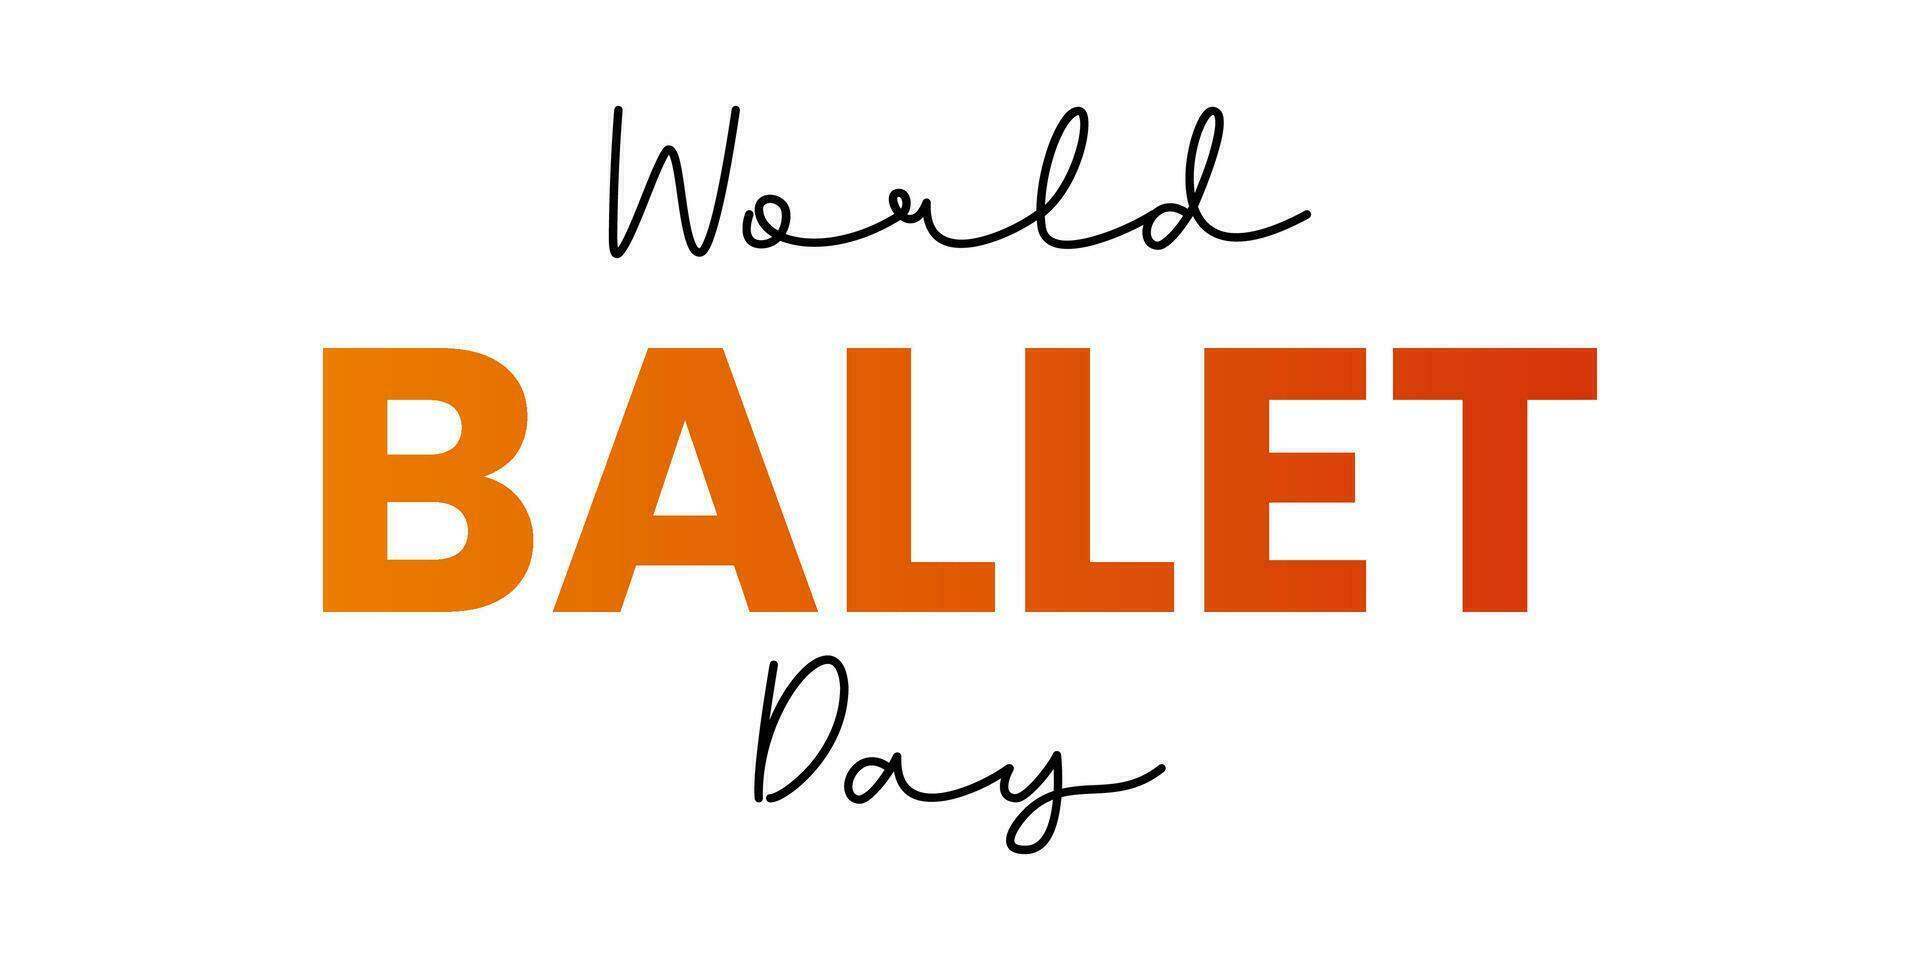 mundo ballet día en Primero octubre. ballet danza conceptual ilustración. vector